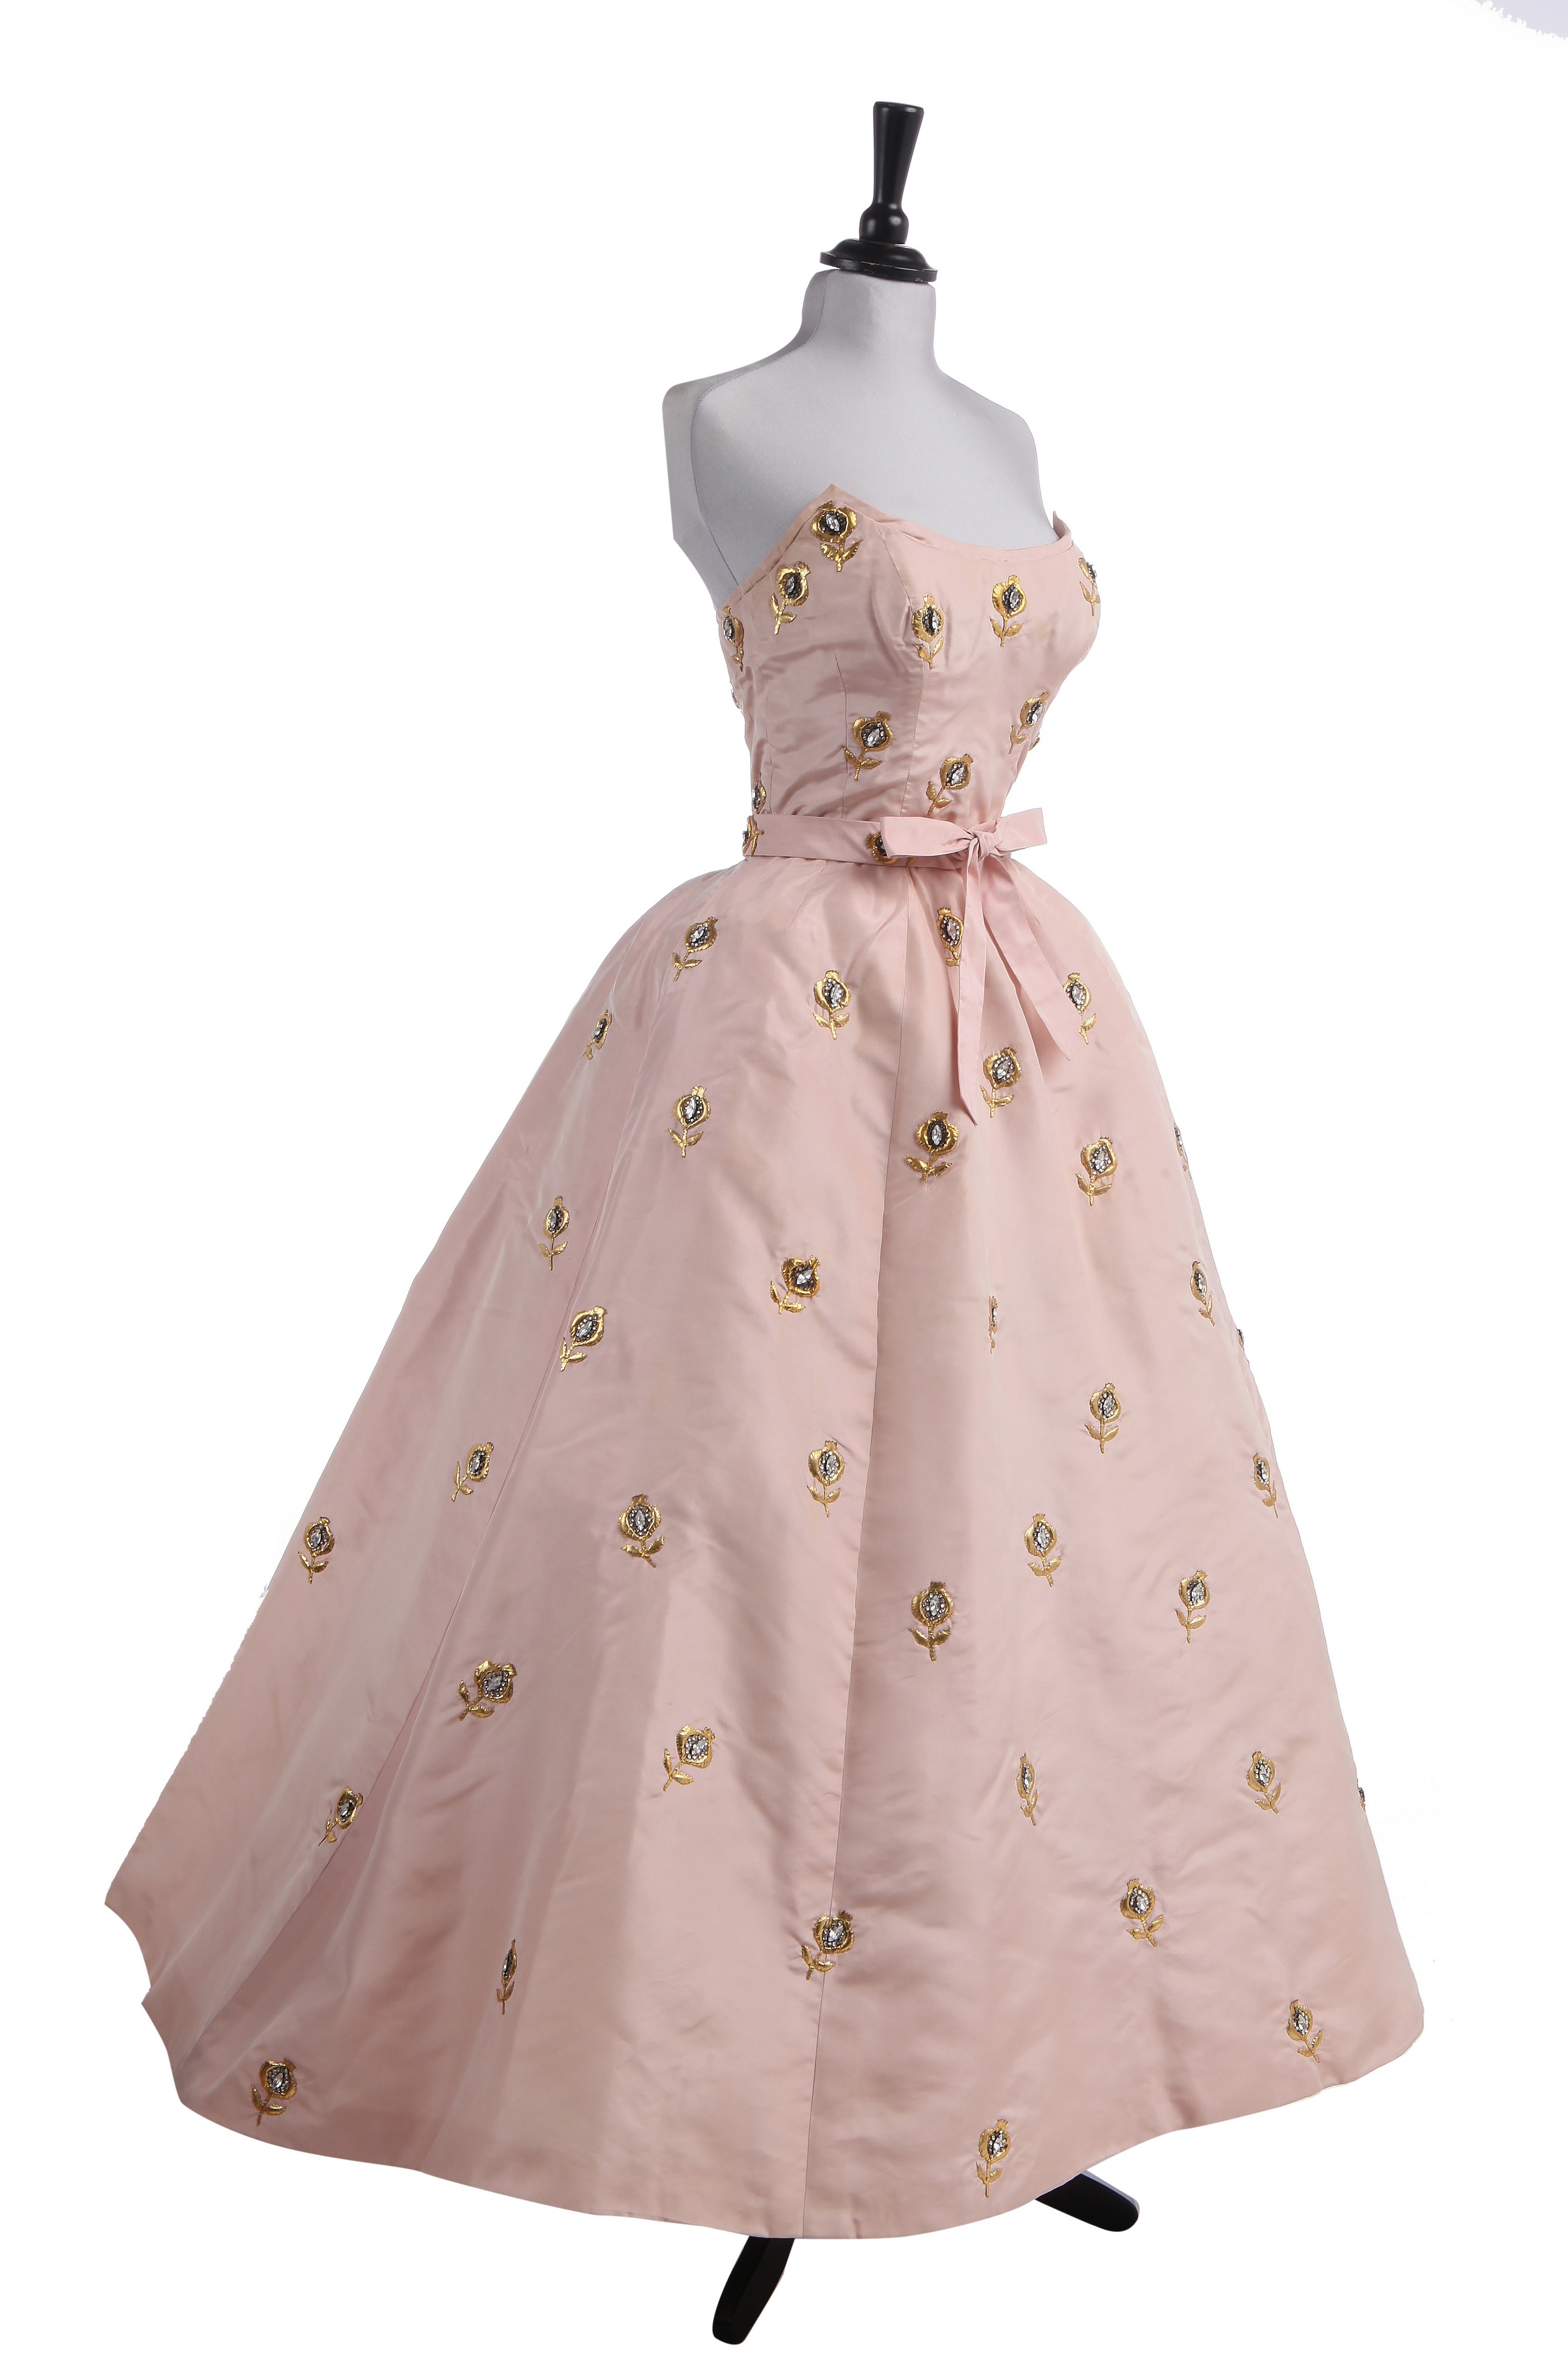 Dress made from silk chiffon By Cristobal Balenciaga Figure 3. Lauren